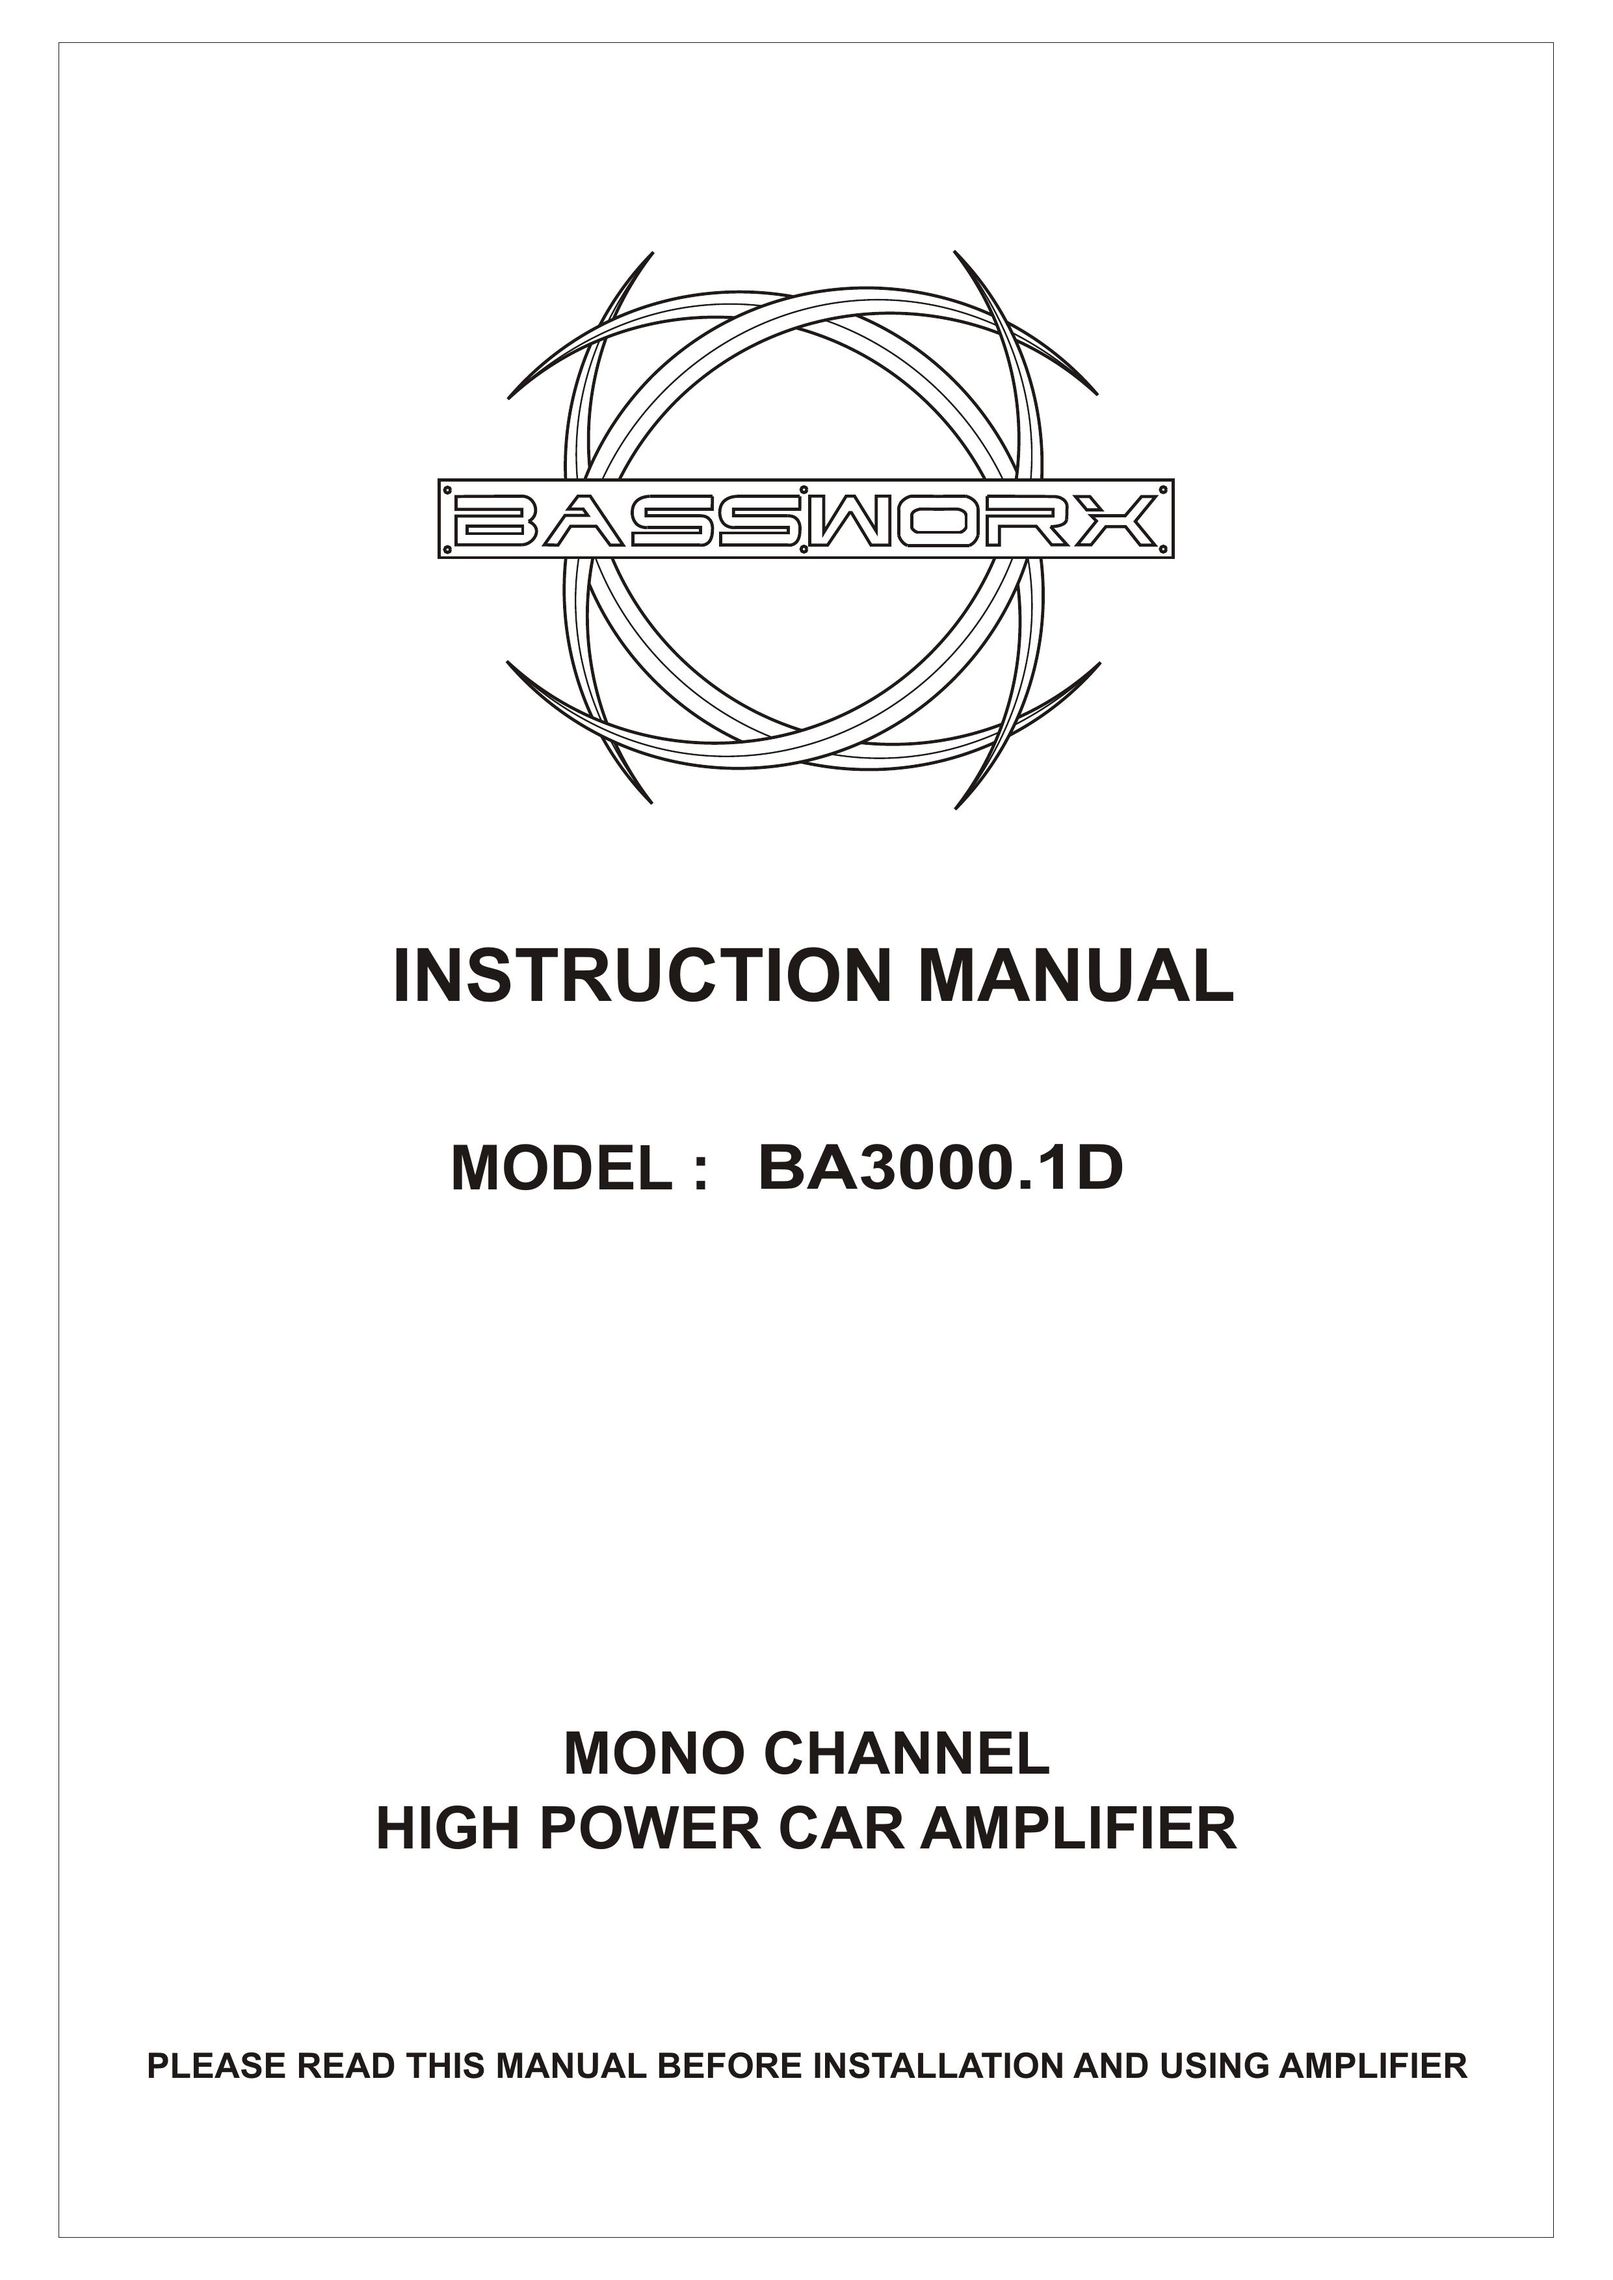 Bassworx BA3000.1D Car Amplifier User Manual